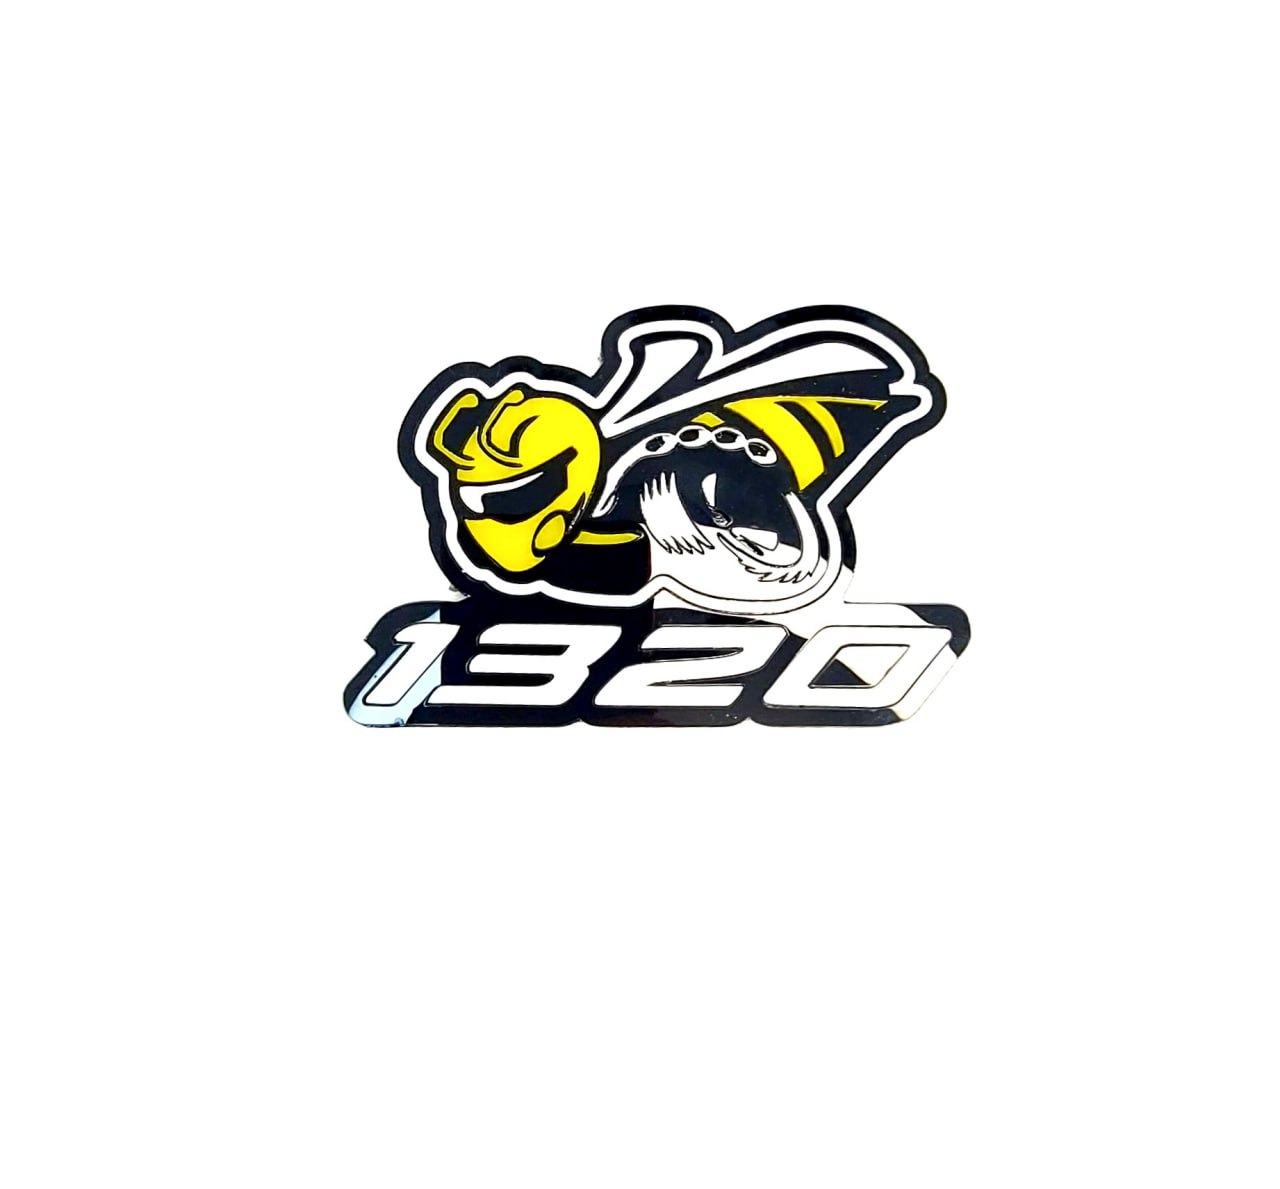 Emblemat osłony chłodnicy DODGE z logo Scatpack